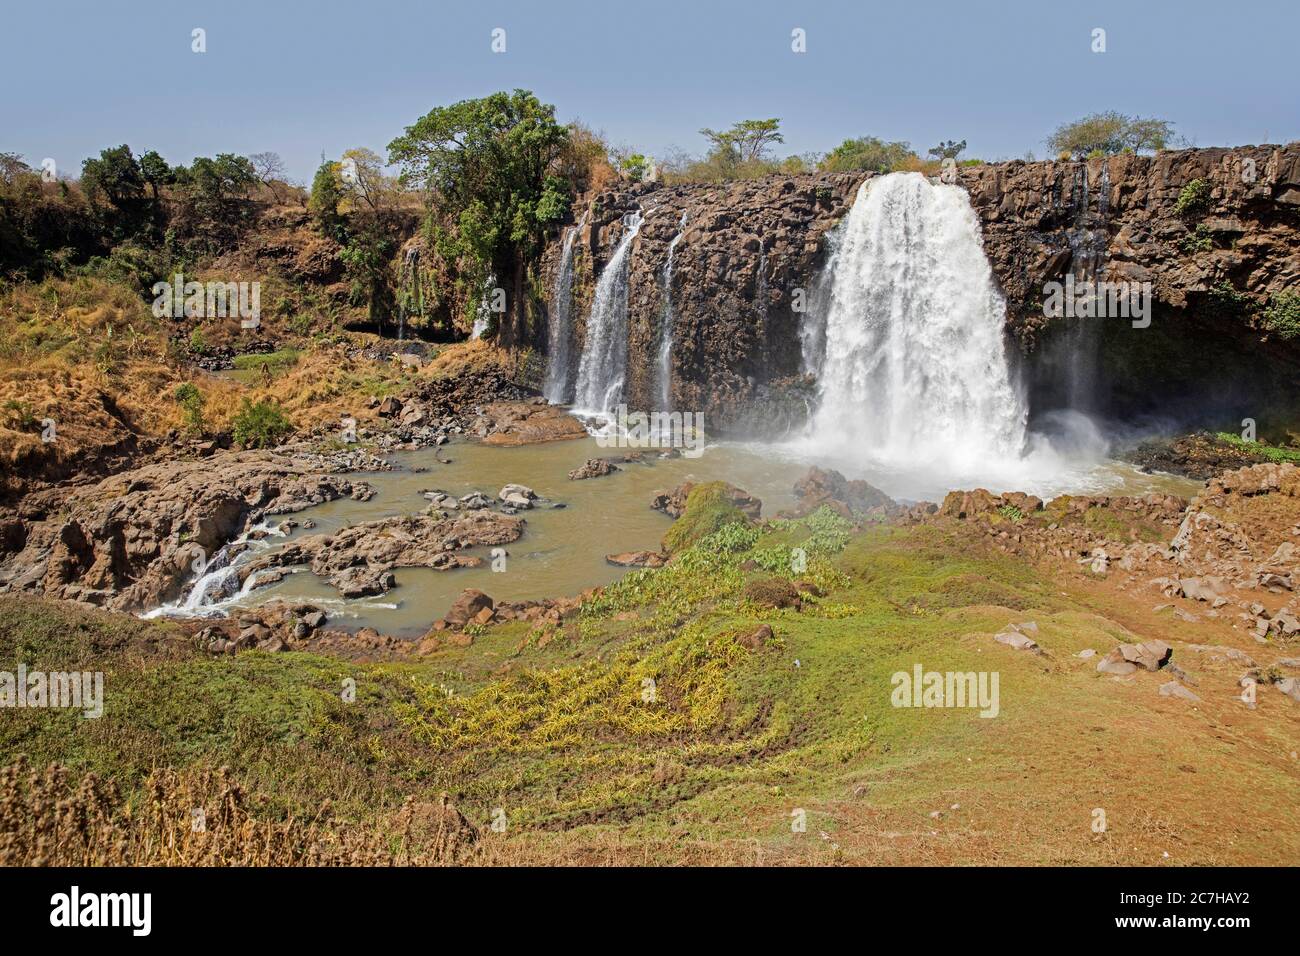 Tis Abay / Blue Nile Falls, waterfall on the Blue Nile river near Bahir Dar during the dry season, Amhara Region, Ethiopia, Africa Stock Photo